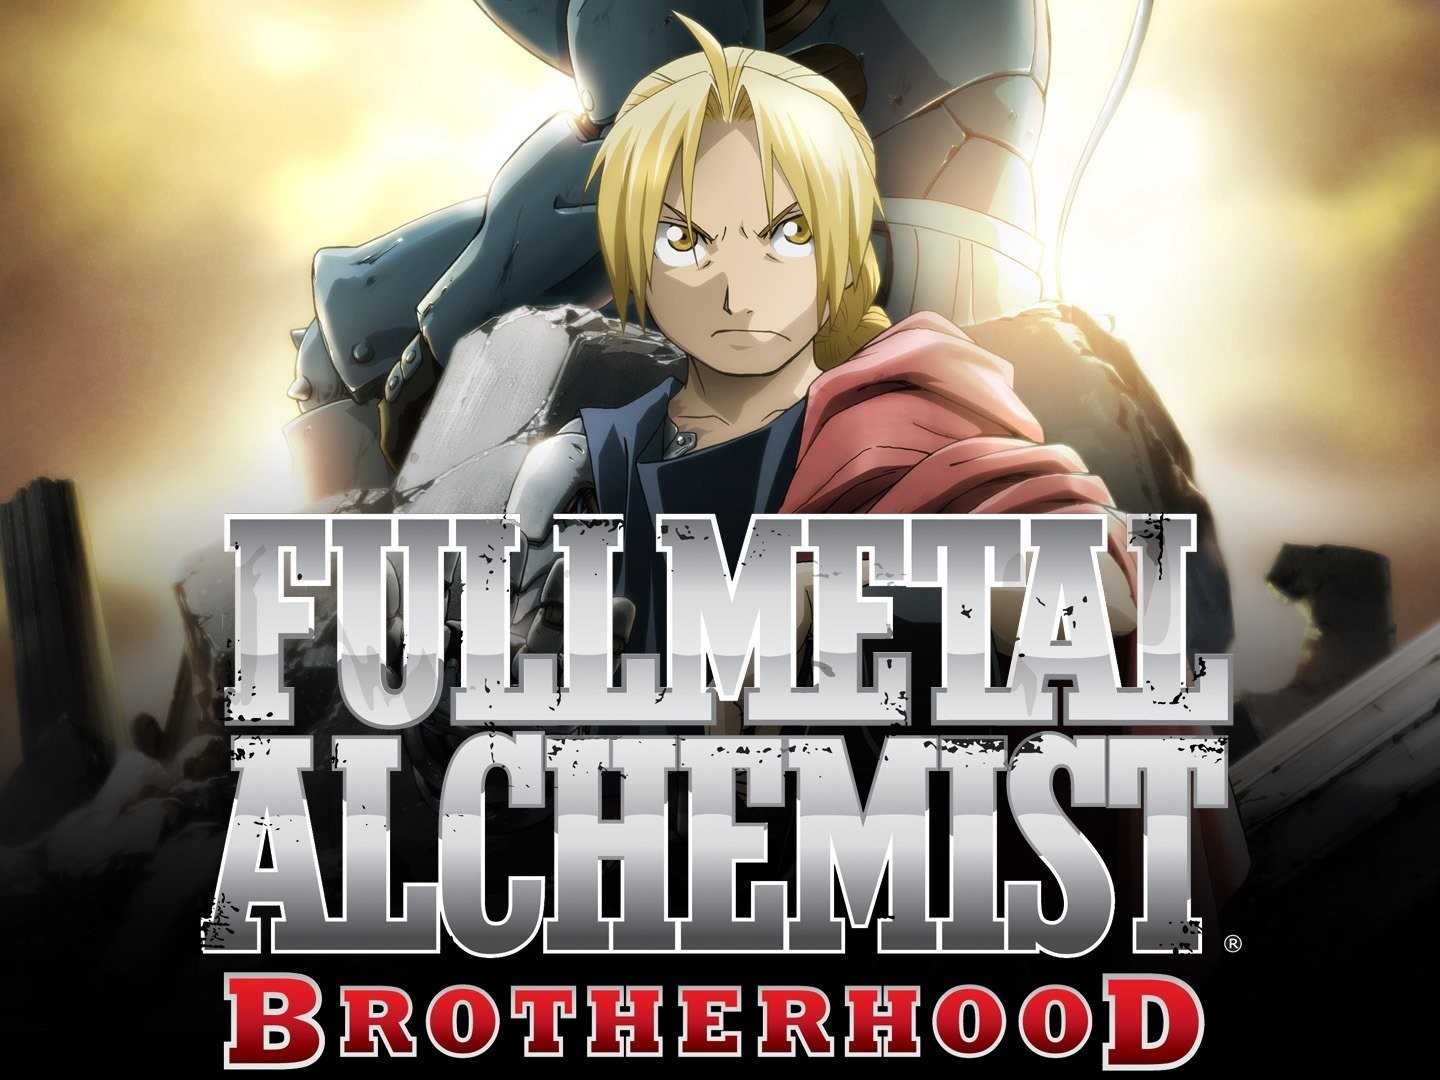 Fullmetal Alchemist: Brotherhood 1 season 0 episode – 4-Koma Theater 16:  The Power of a God